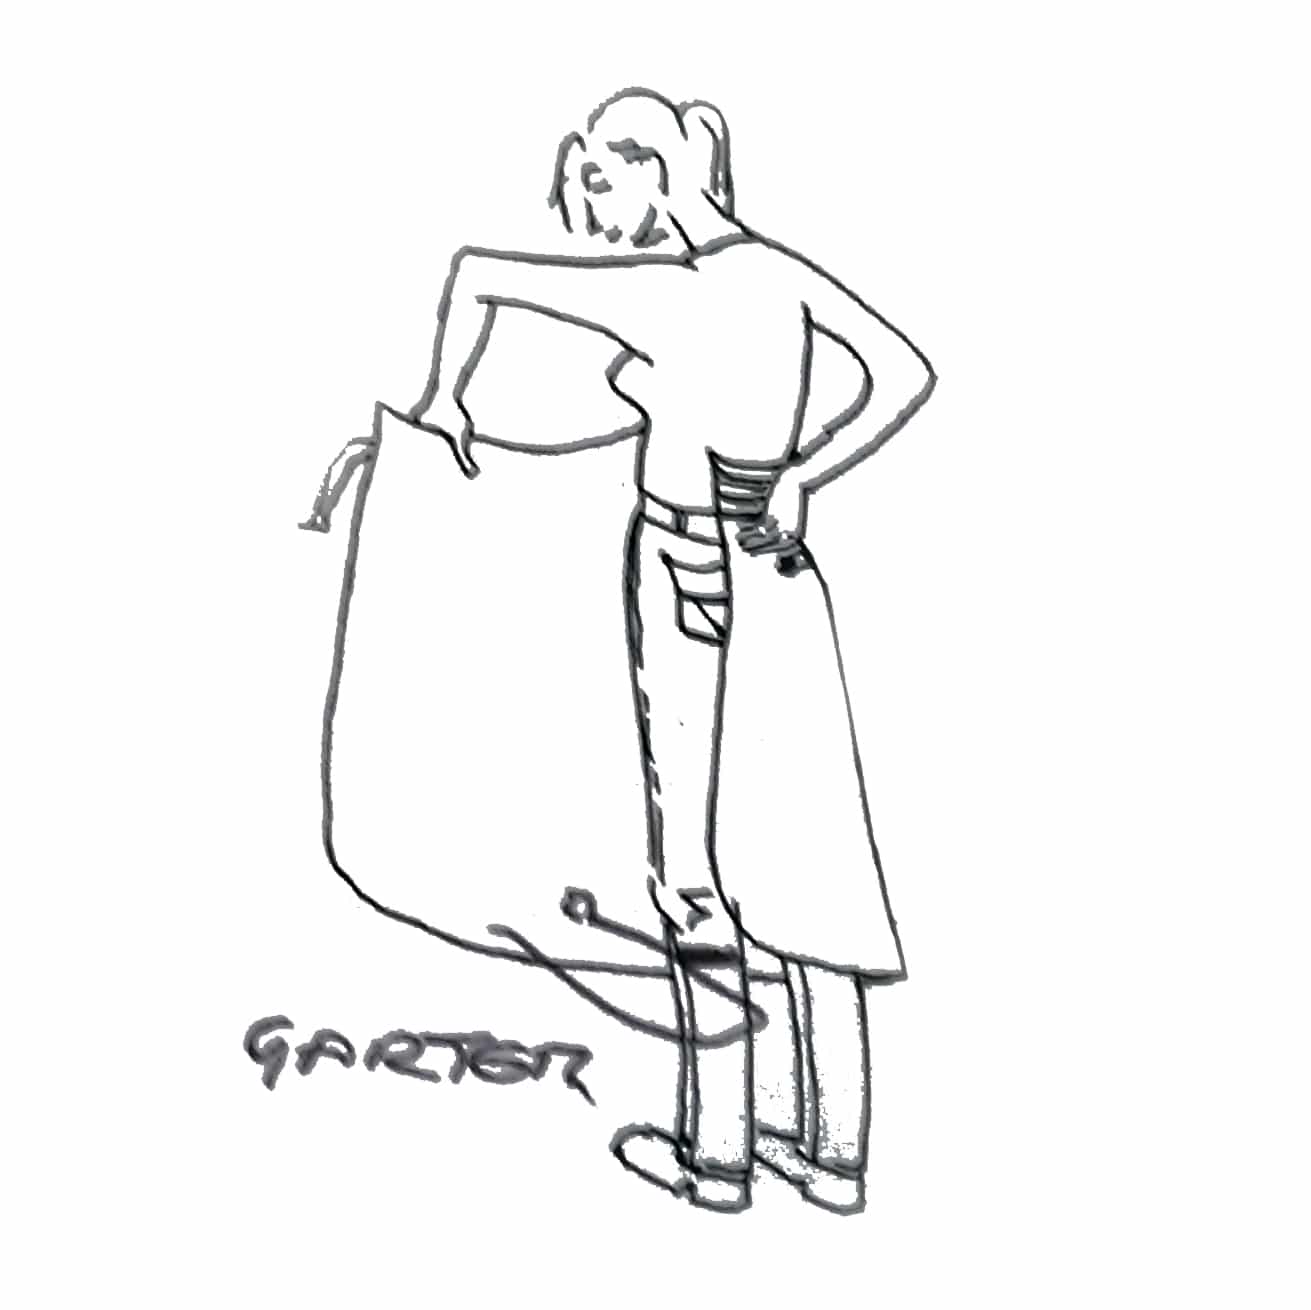 The Rainwrap garter